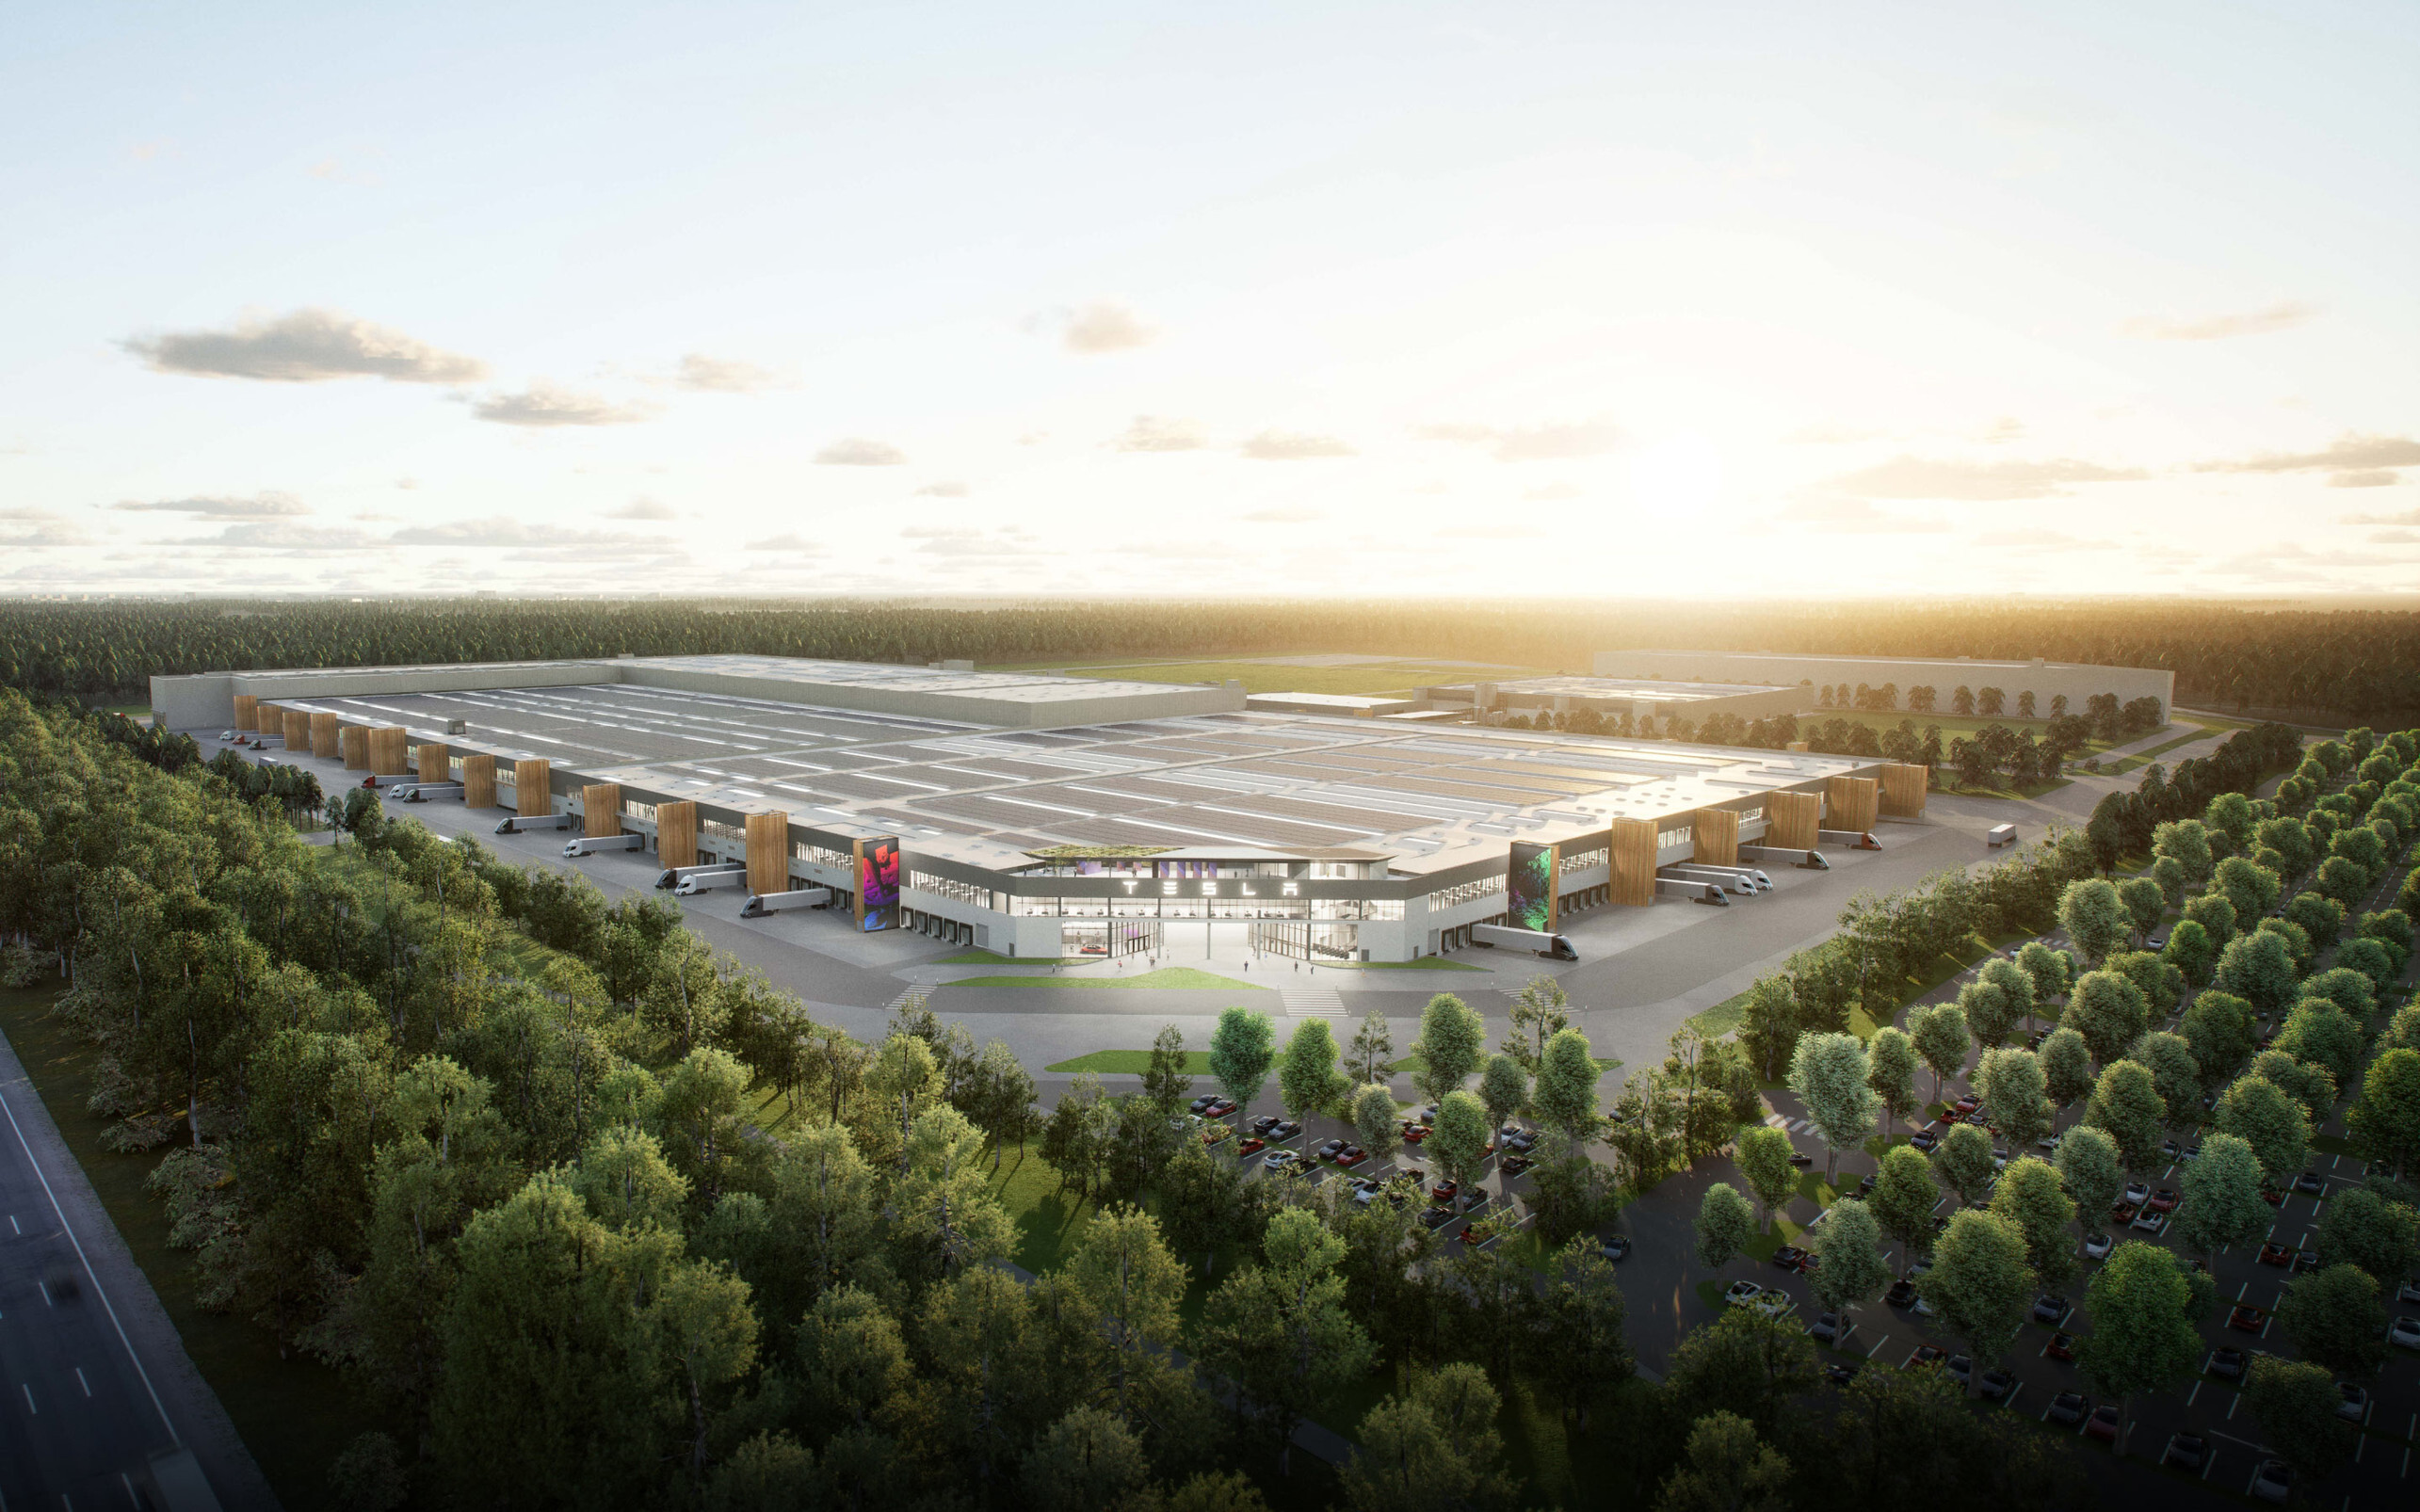 More information about "Το εντυπωσιακό Tesla Gigafactory Berlin-Brandenburg στην Γερμανία"